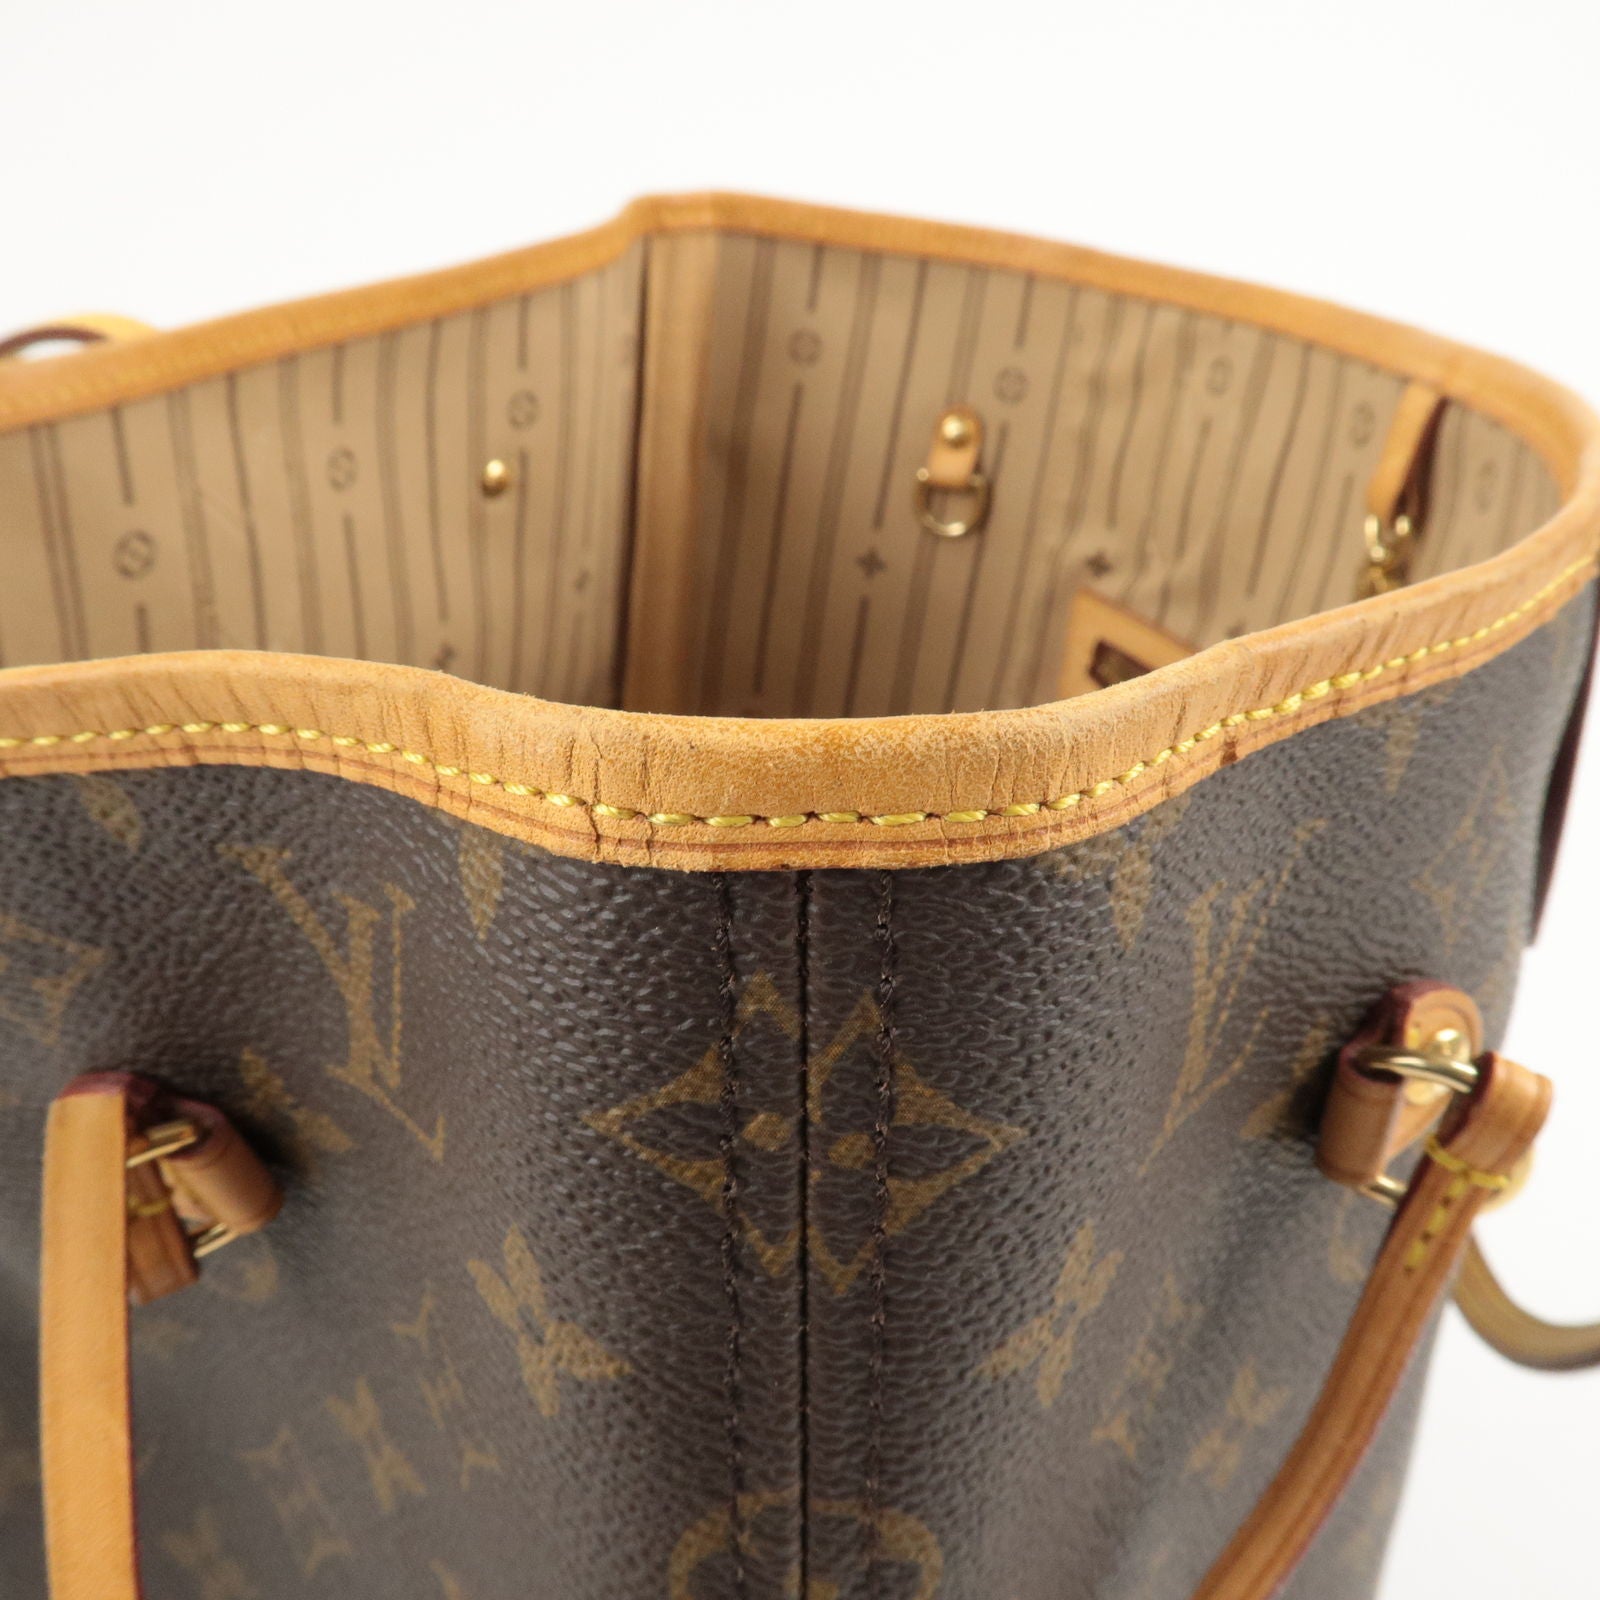 Louis Vuitton - Neverfull mm Tote Bag - Black - Monogram Leather - Women - Luxury